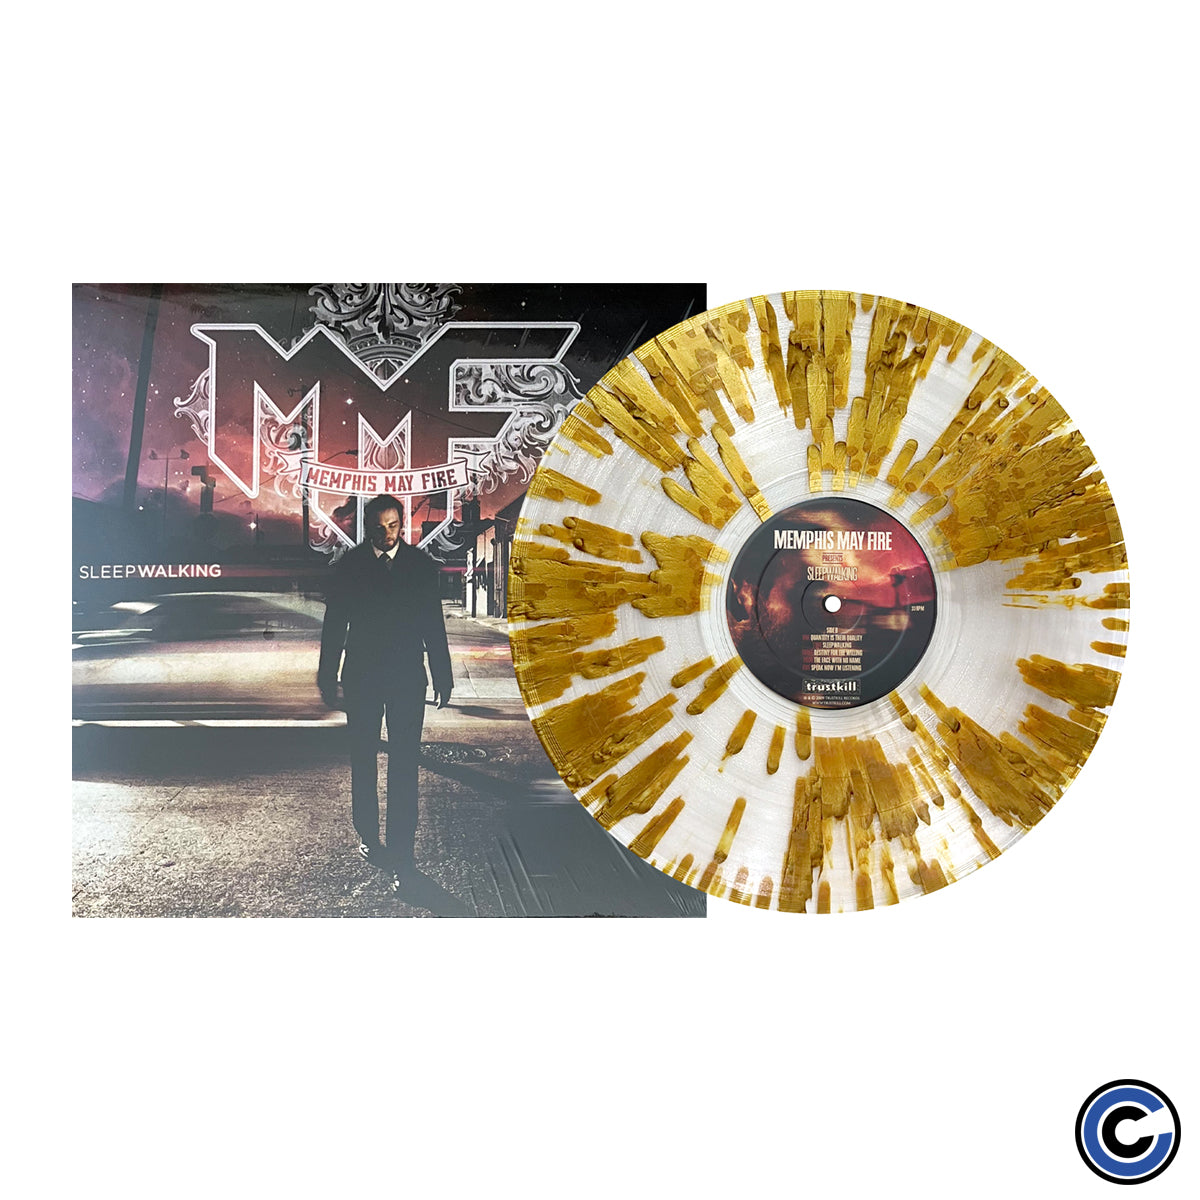 Memphis May Fire "Sleepwalking" 12" Limited Edition Vinyl